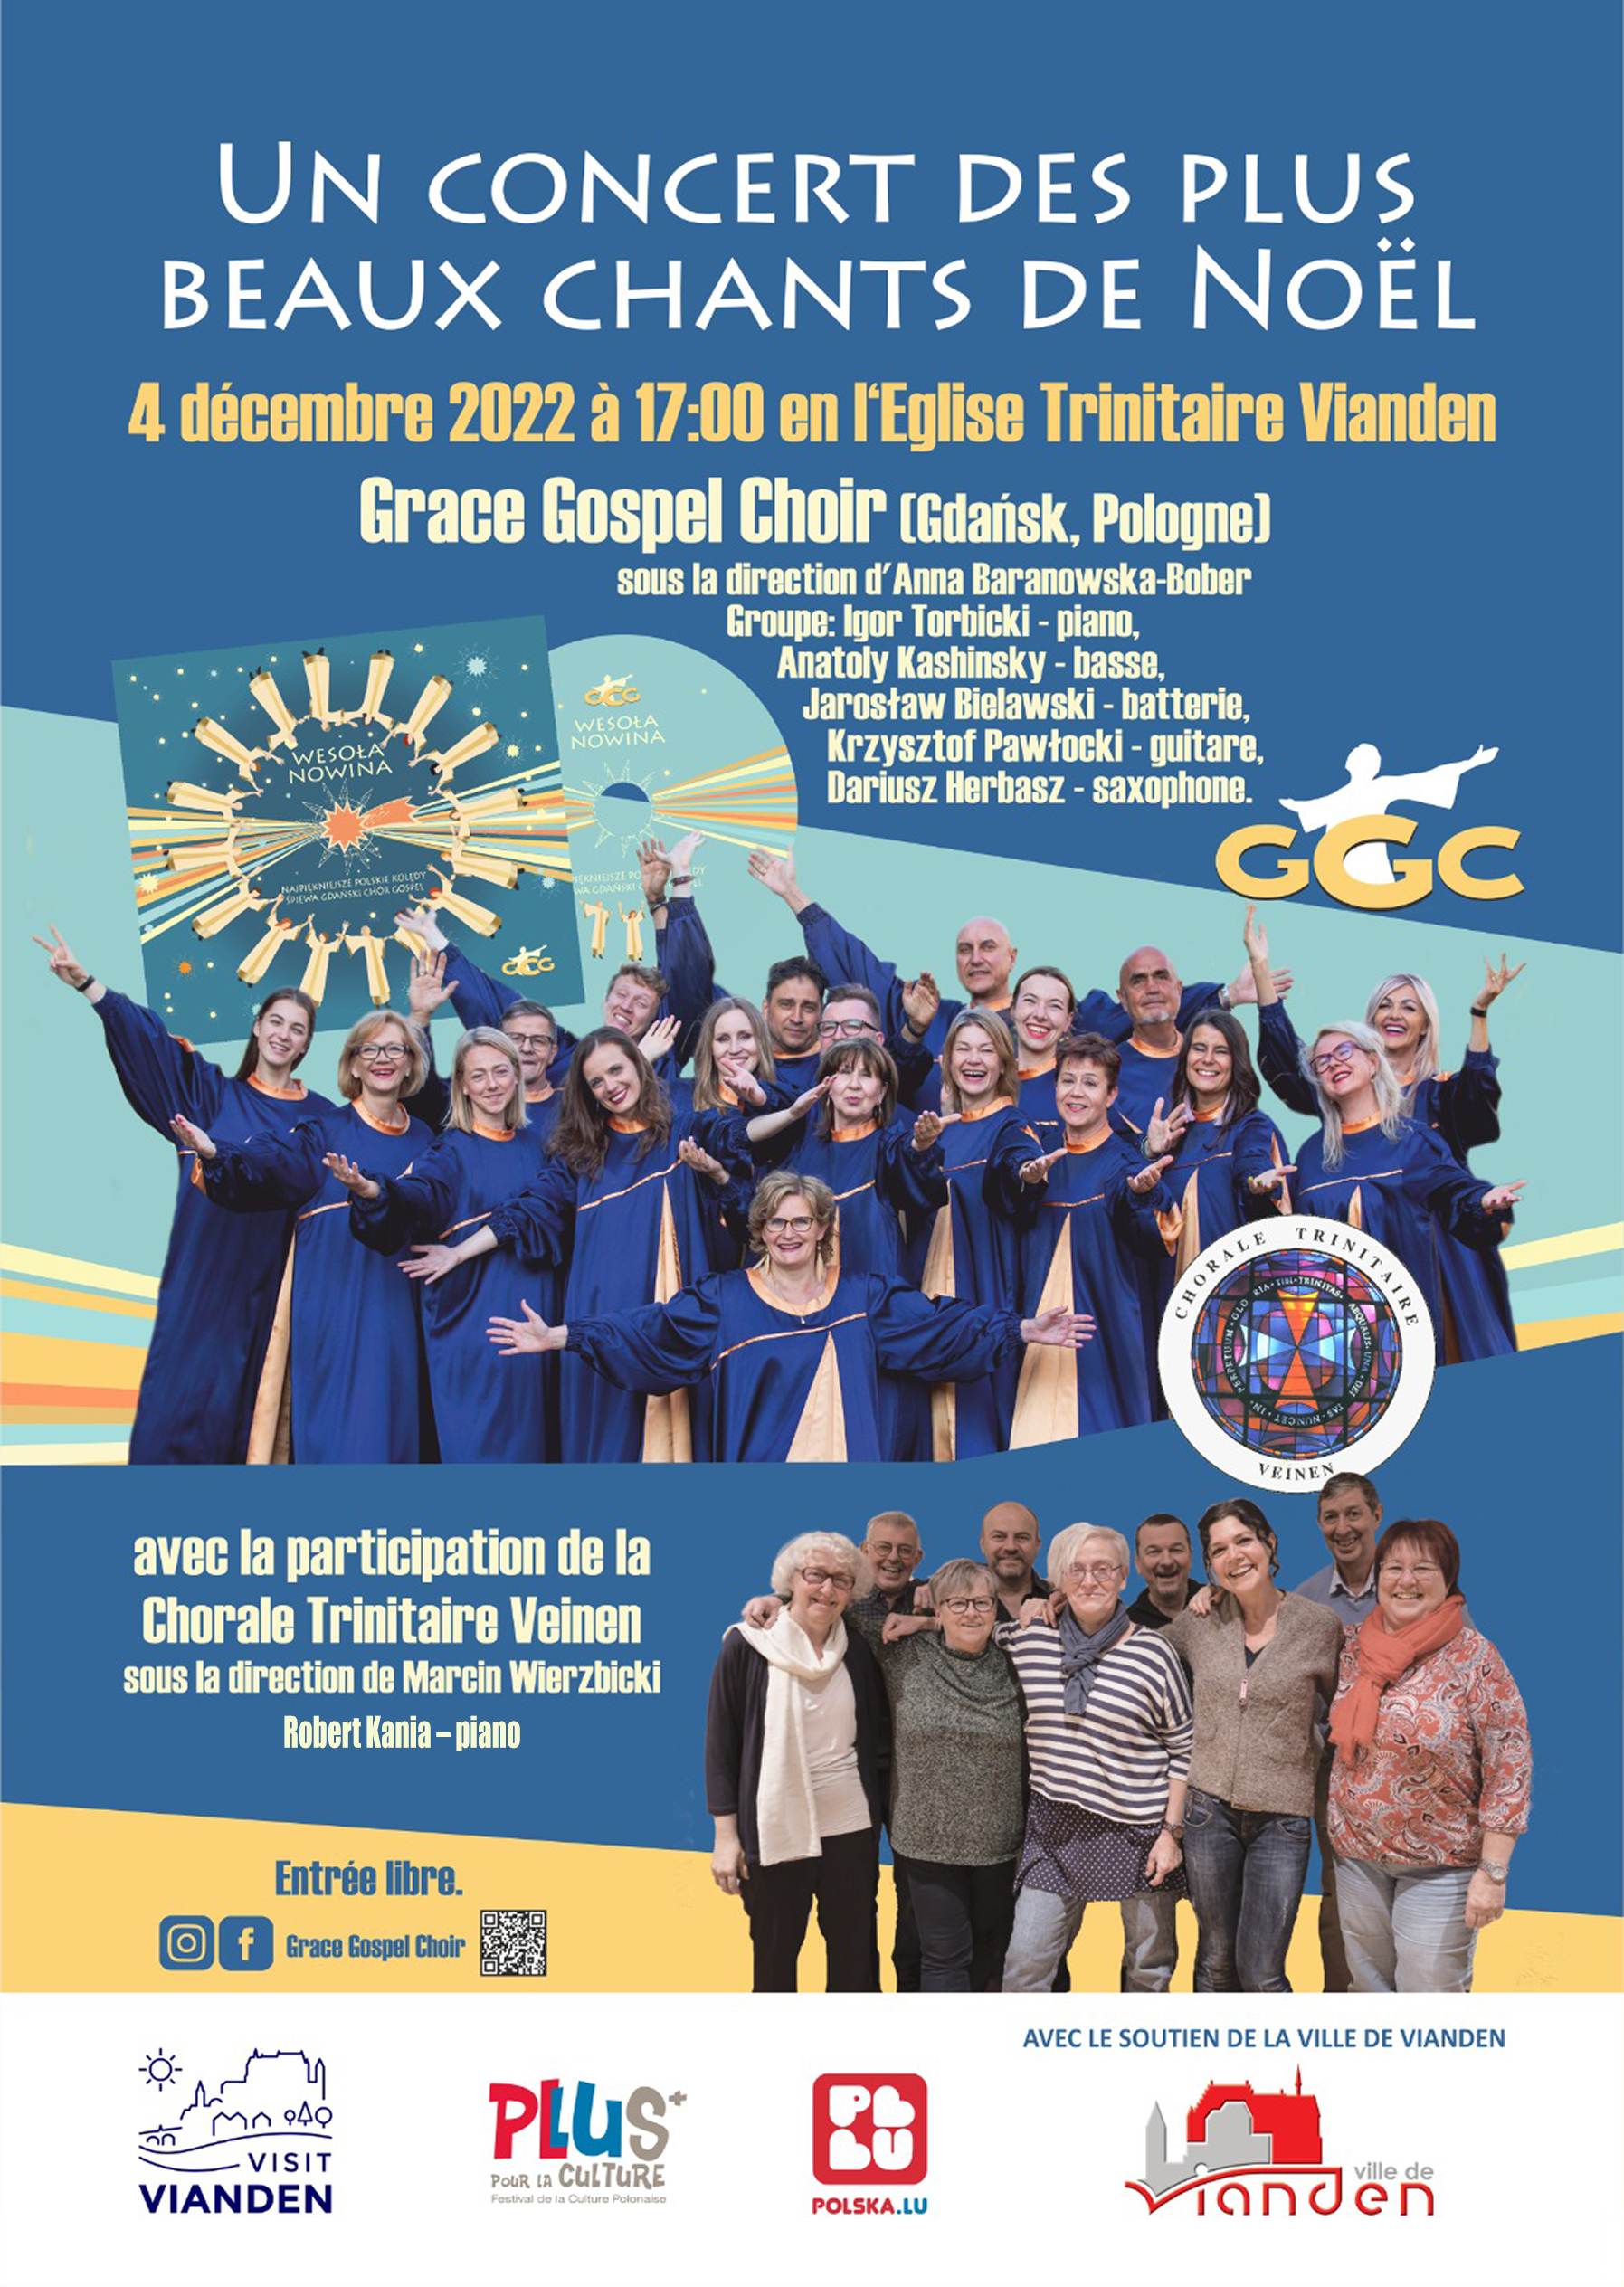 Grace Gospel Choir (4.12.2022)